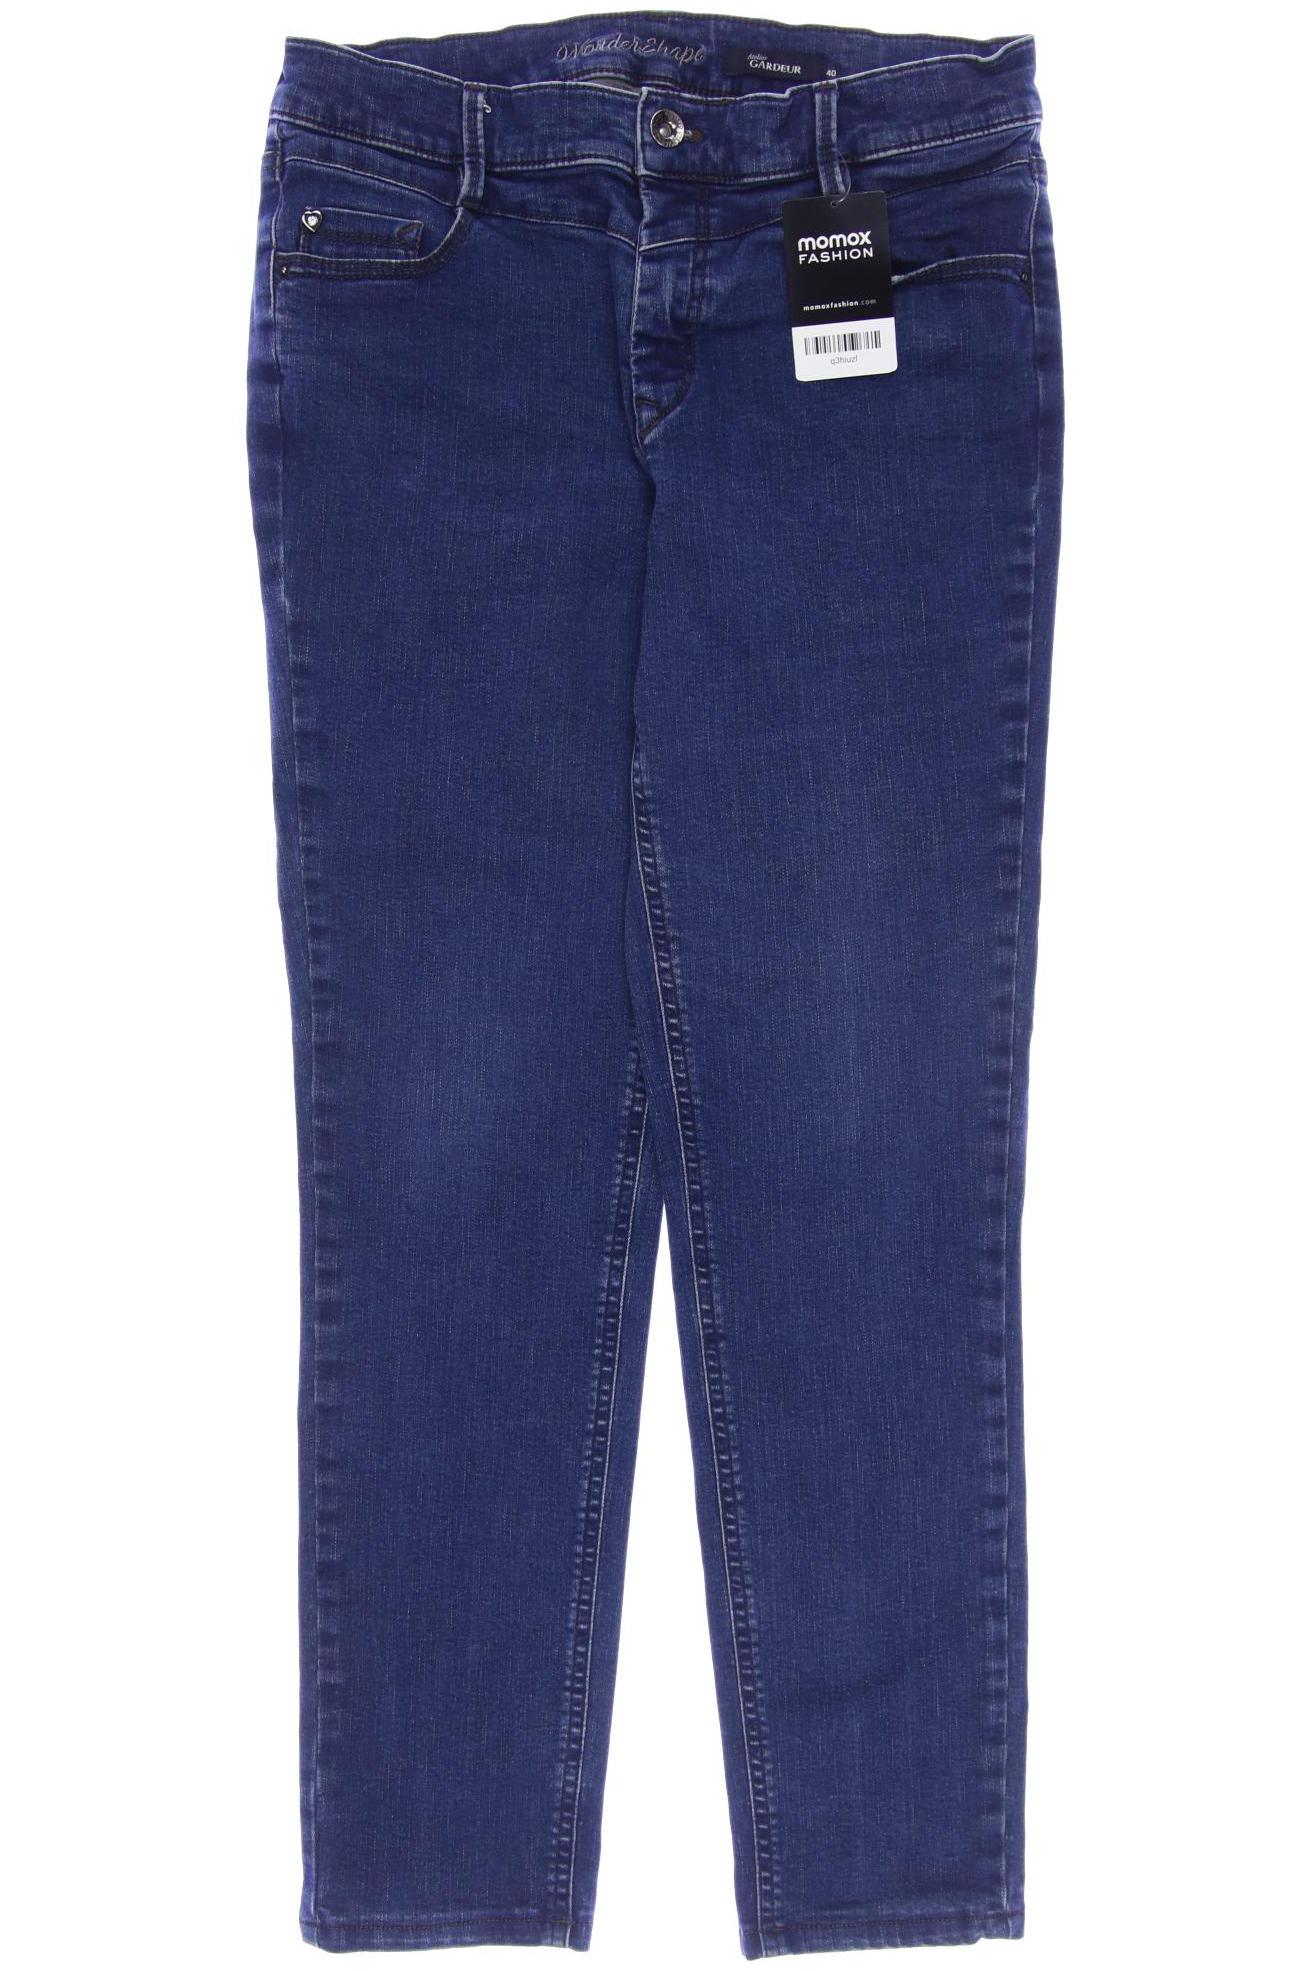 Atelier Gardeur Damen Jeans, blau von Atelier Gardeur